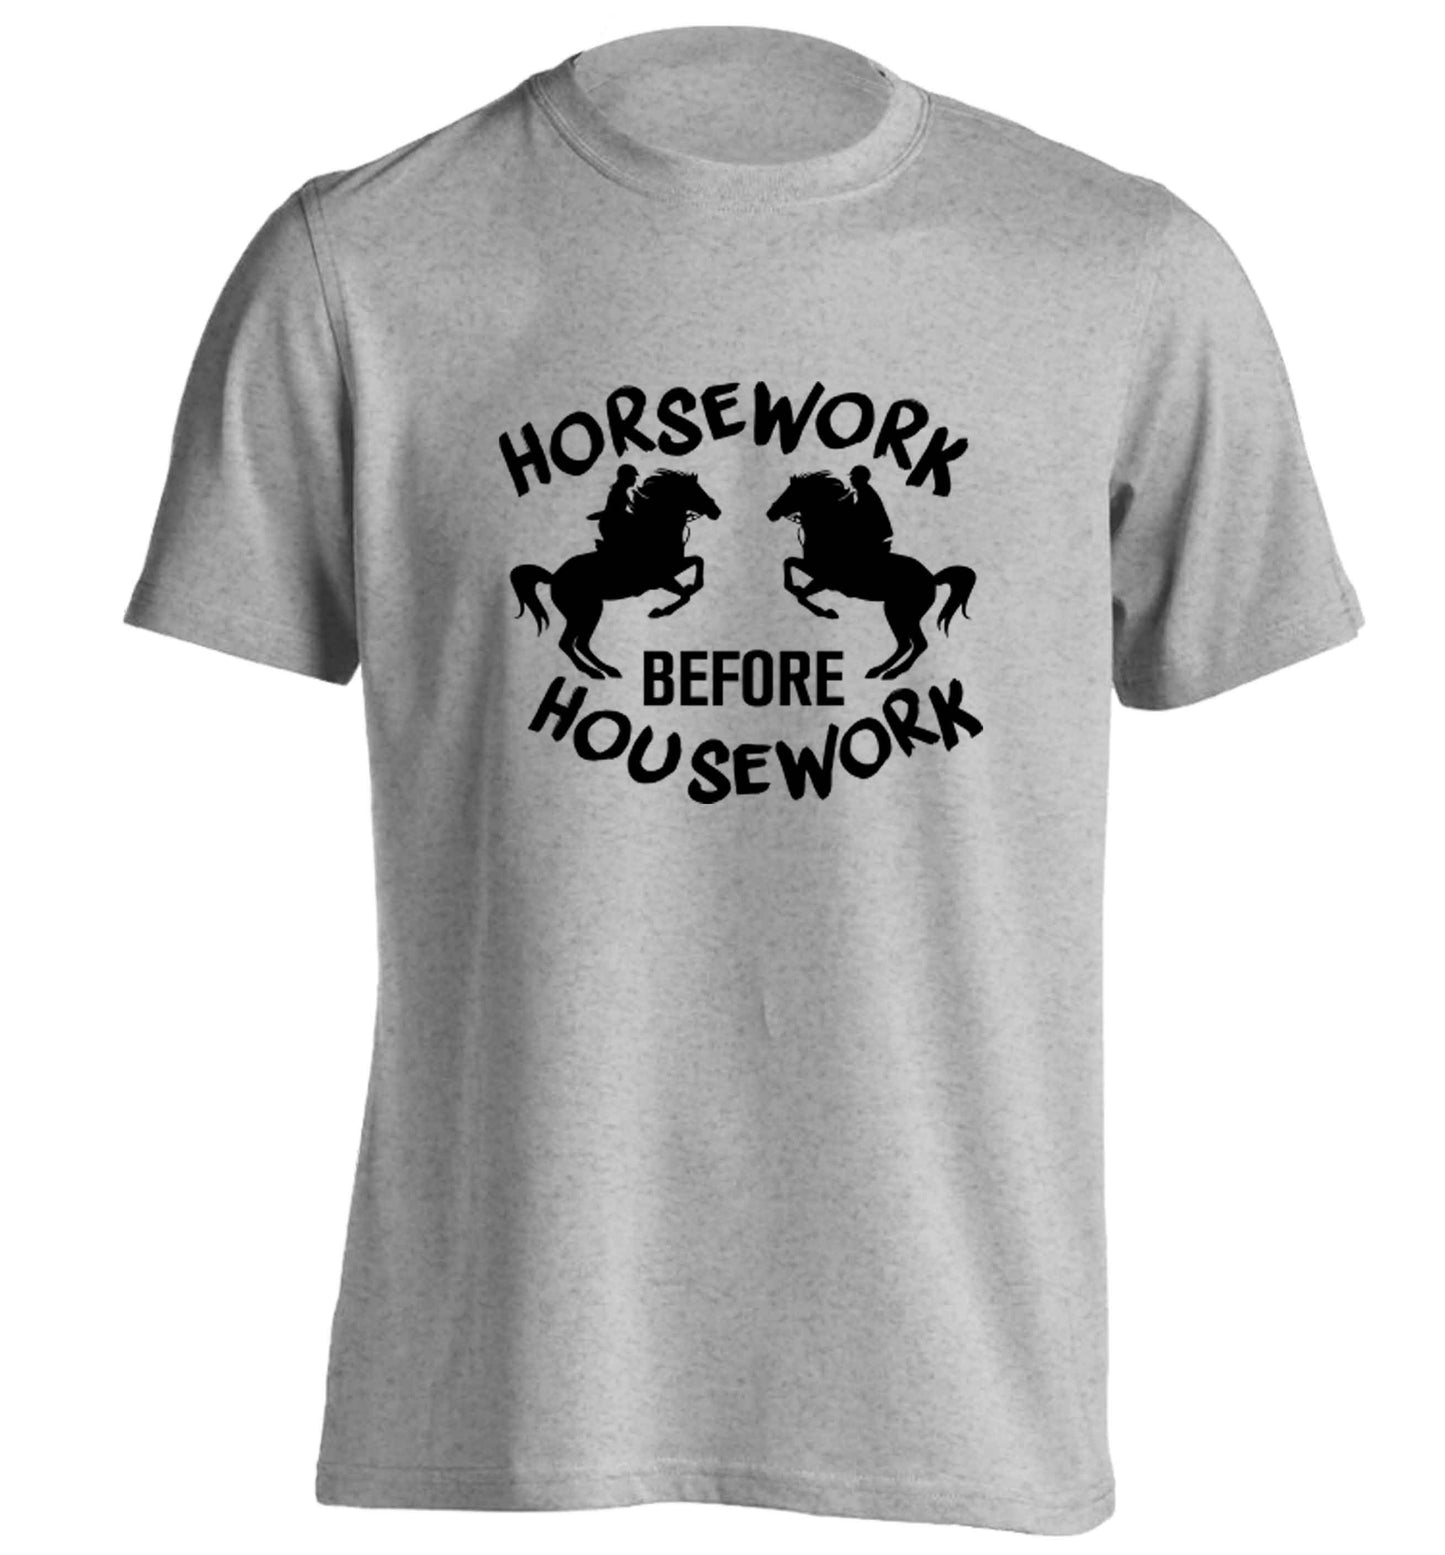 Horsework before housework adults unisex grey Tshirt 2XL